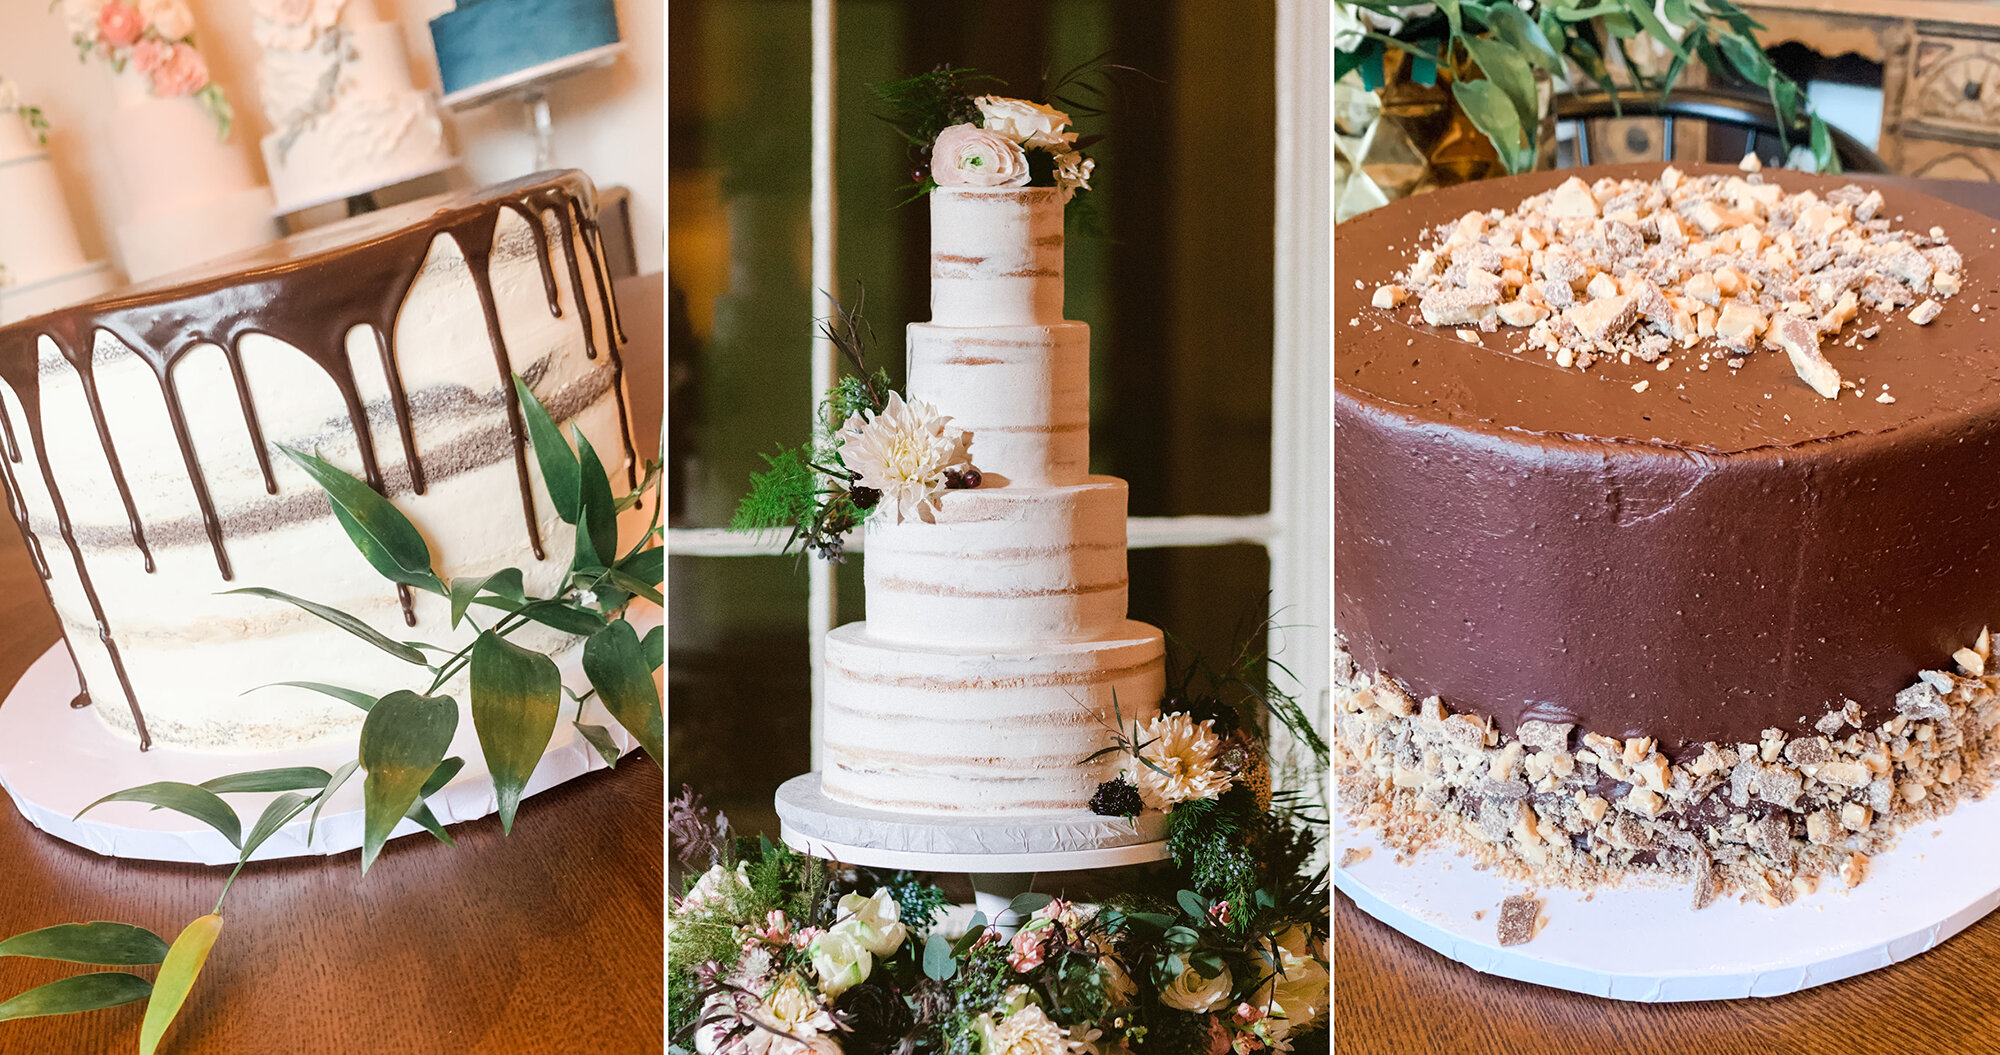 SugarBeeSweetsBakery_DFW-Arlington-Wedding-Cakes.jpg